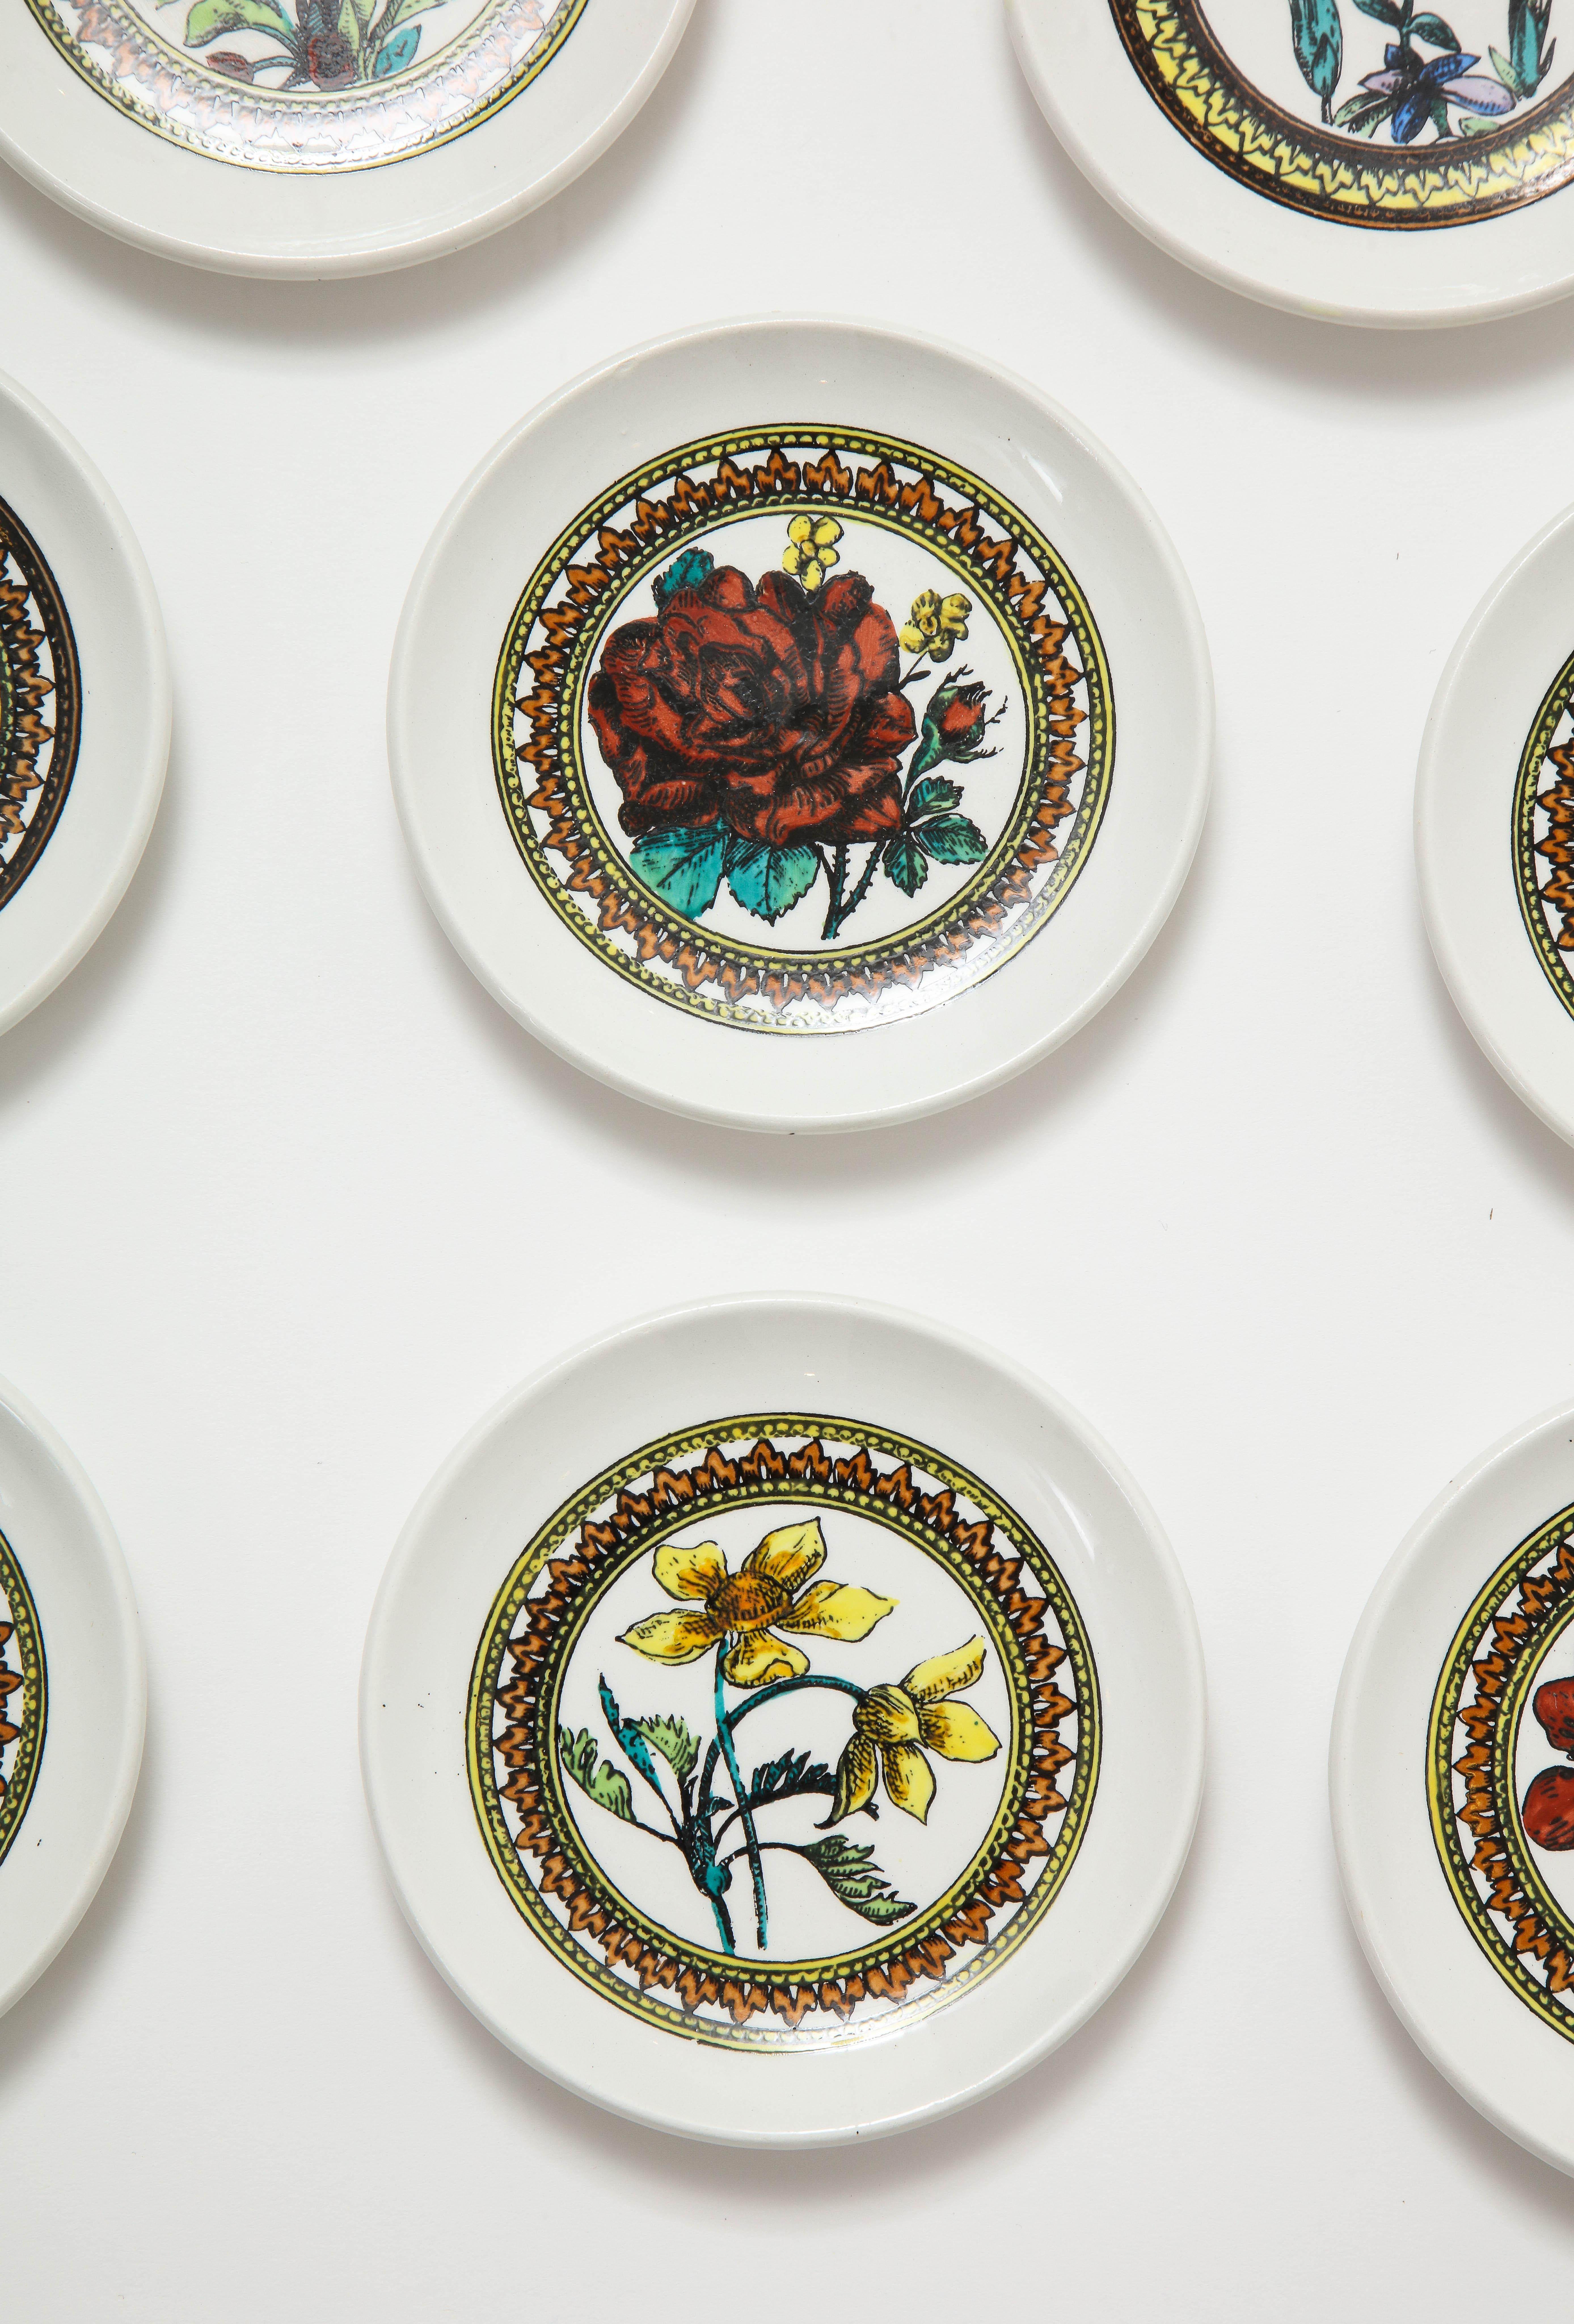 Polychromed Bucciarelli Botanical Porcelain Coasters, Italy